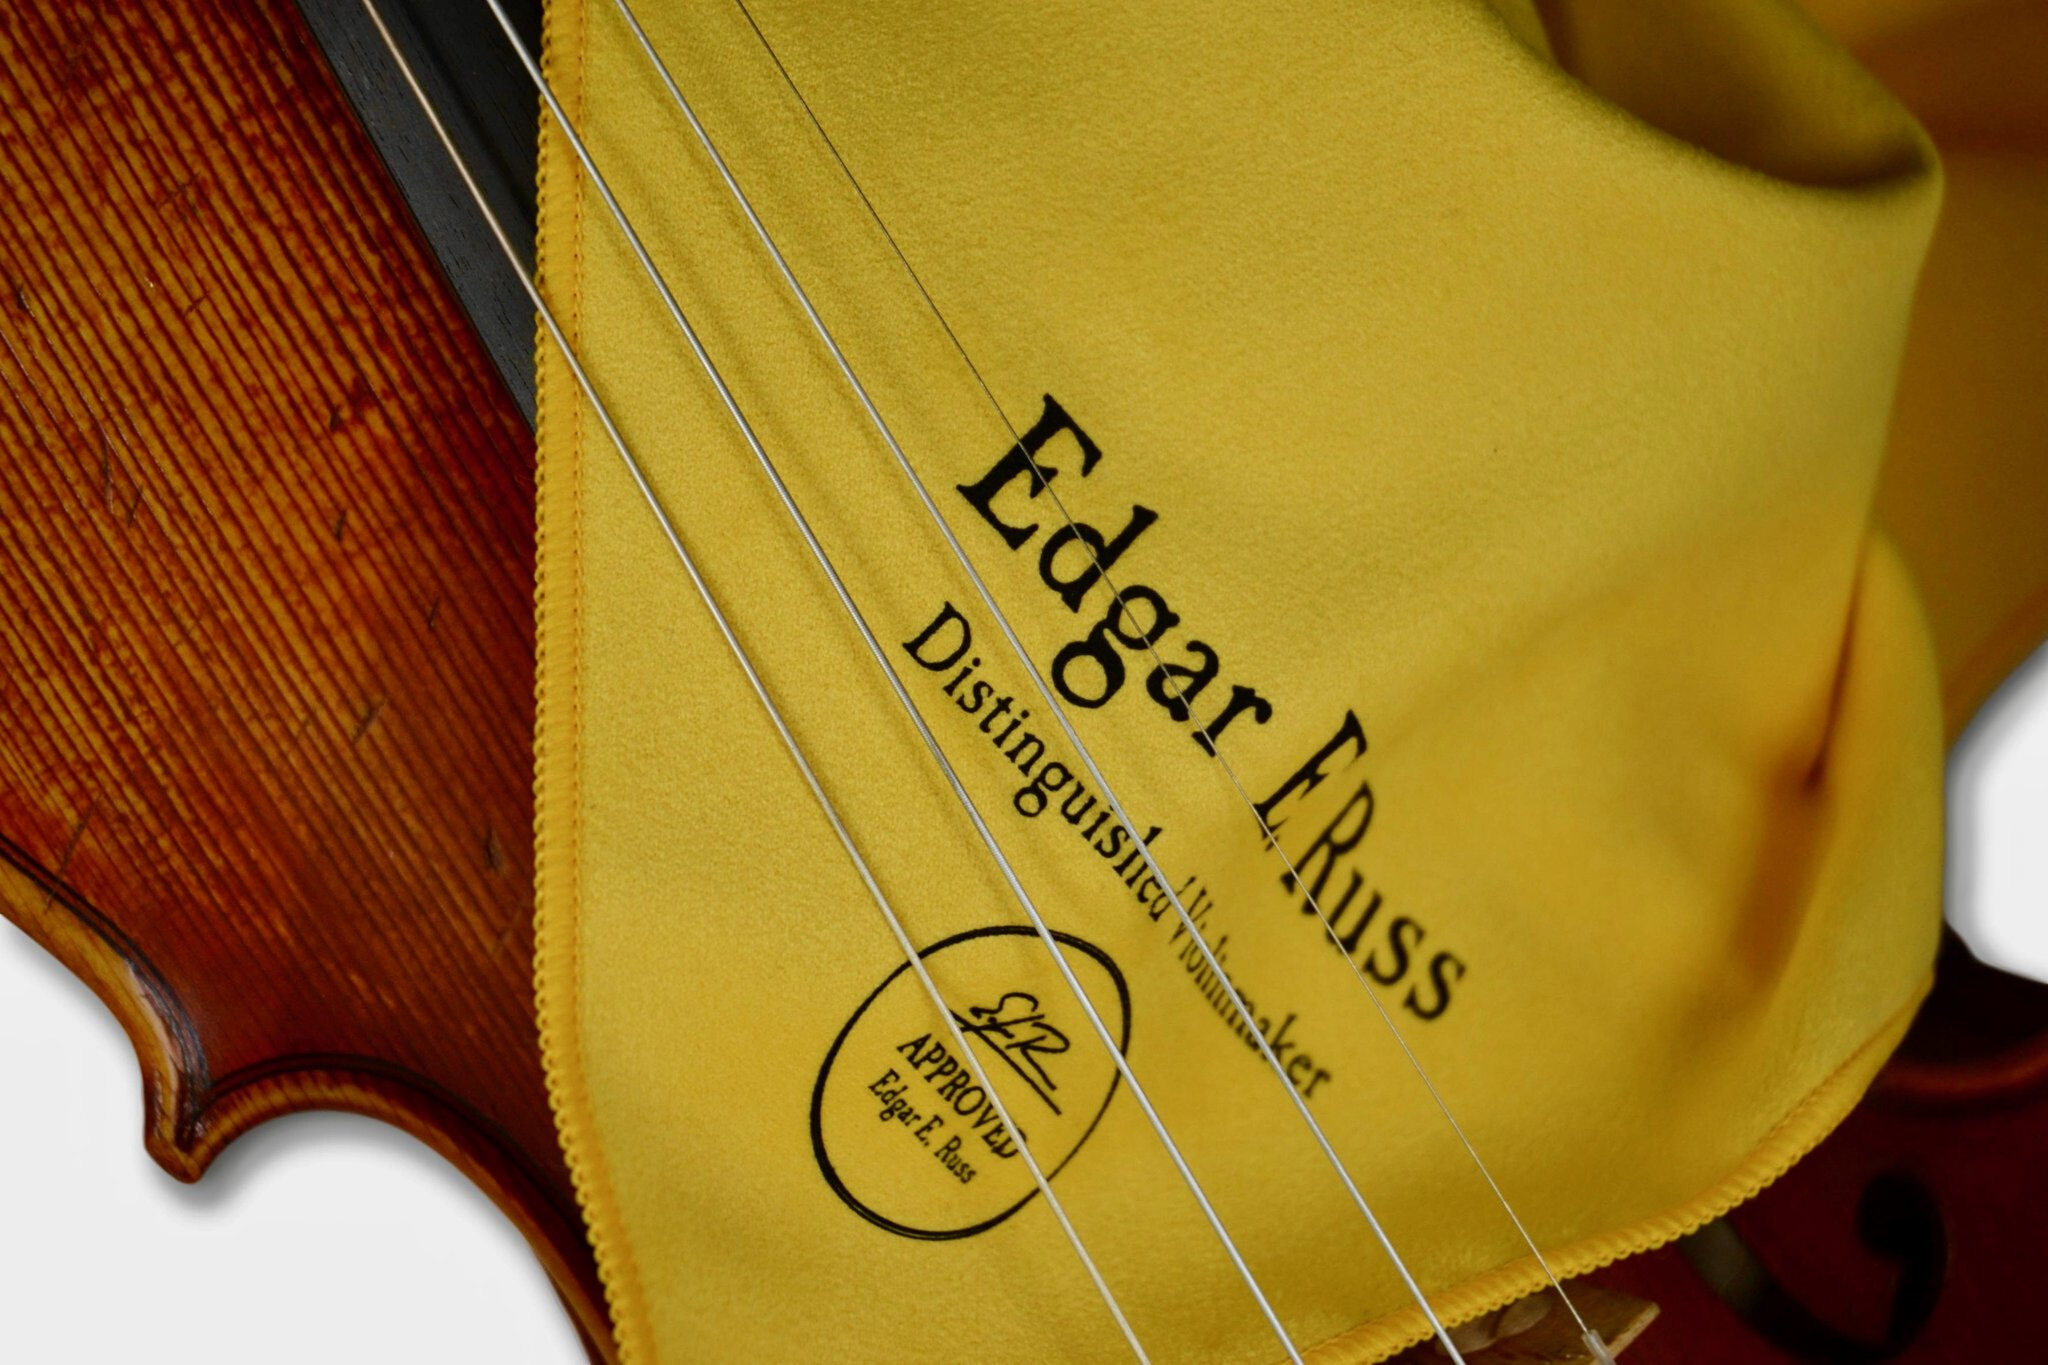 Edgar’s Gentle Instrument Cleaner Kit